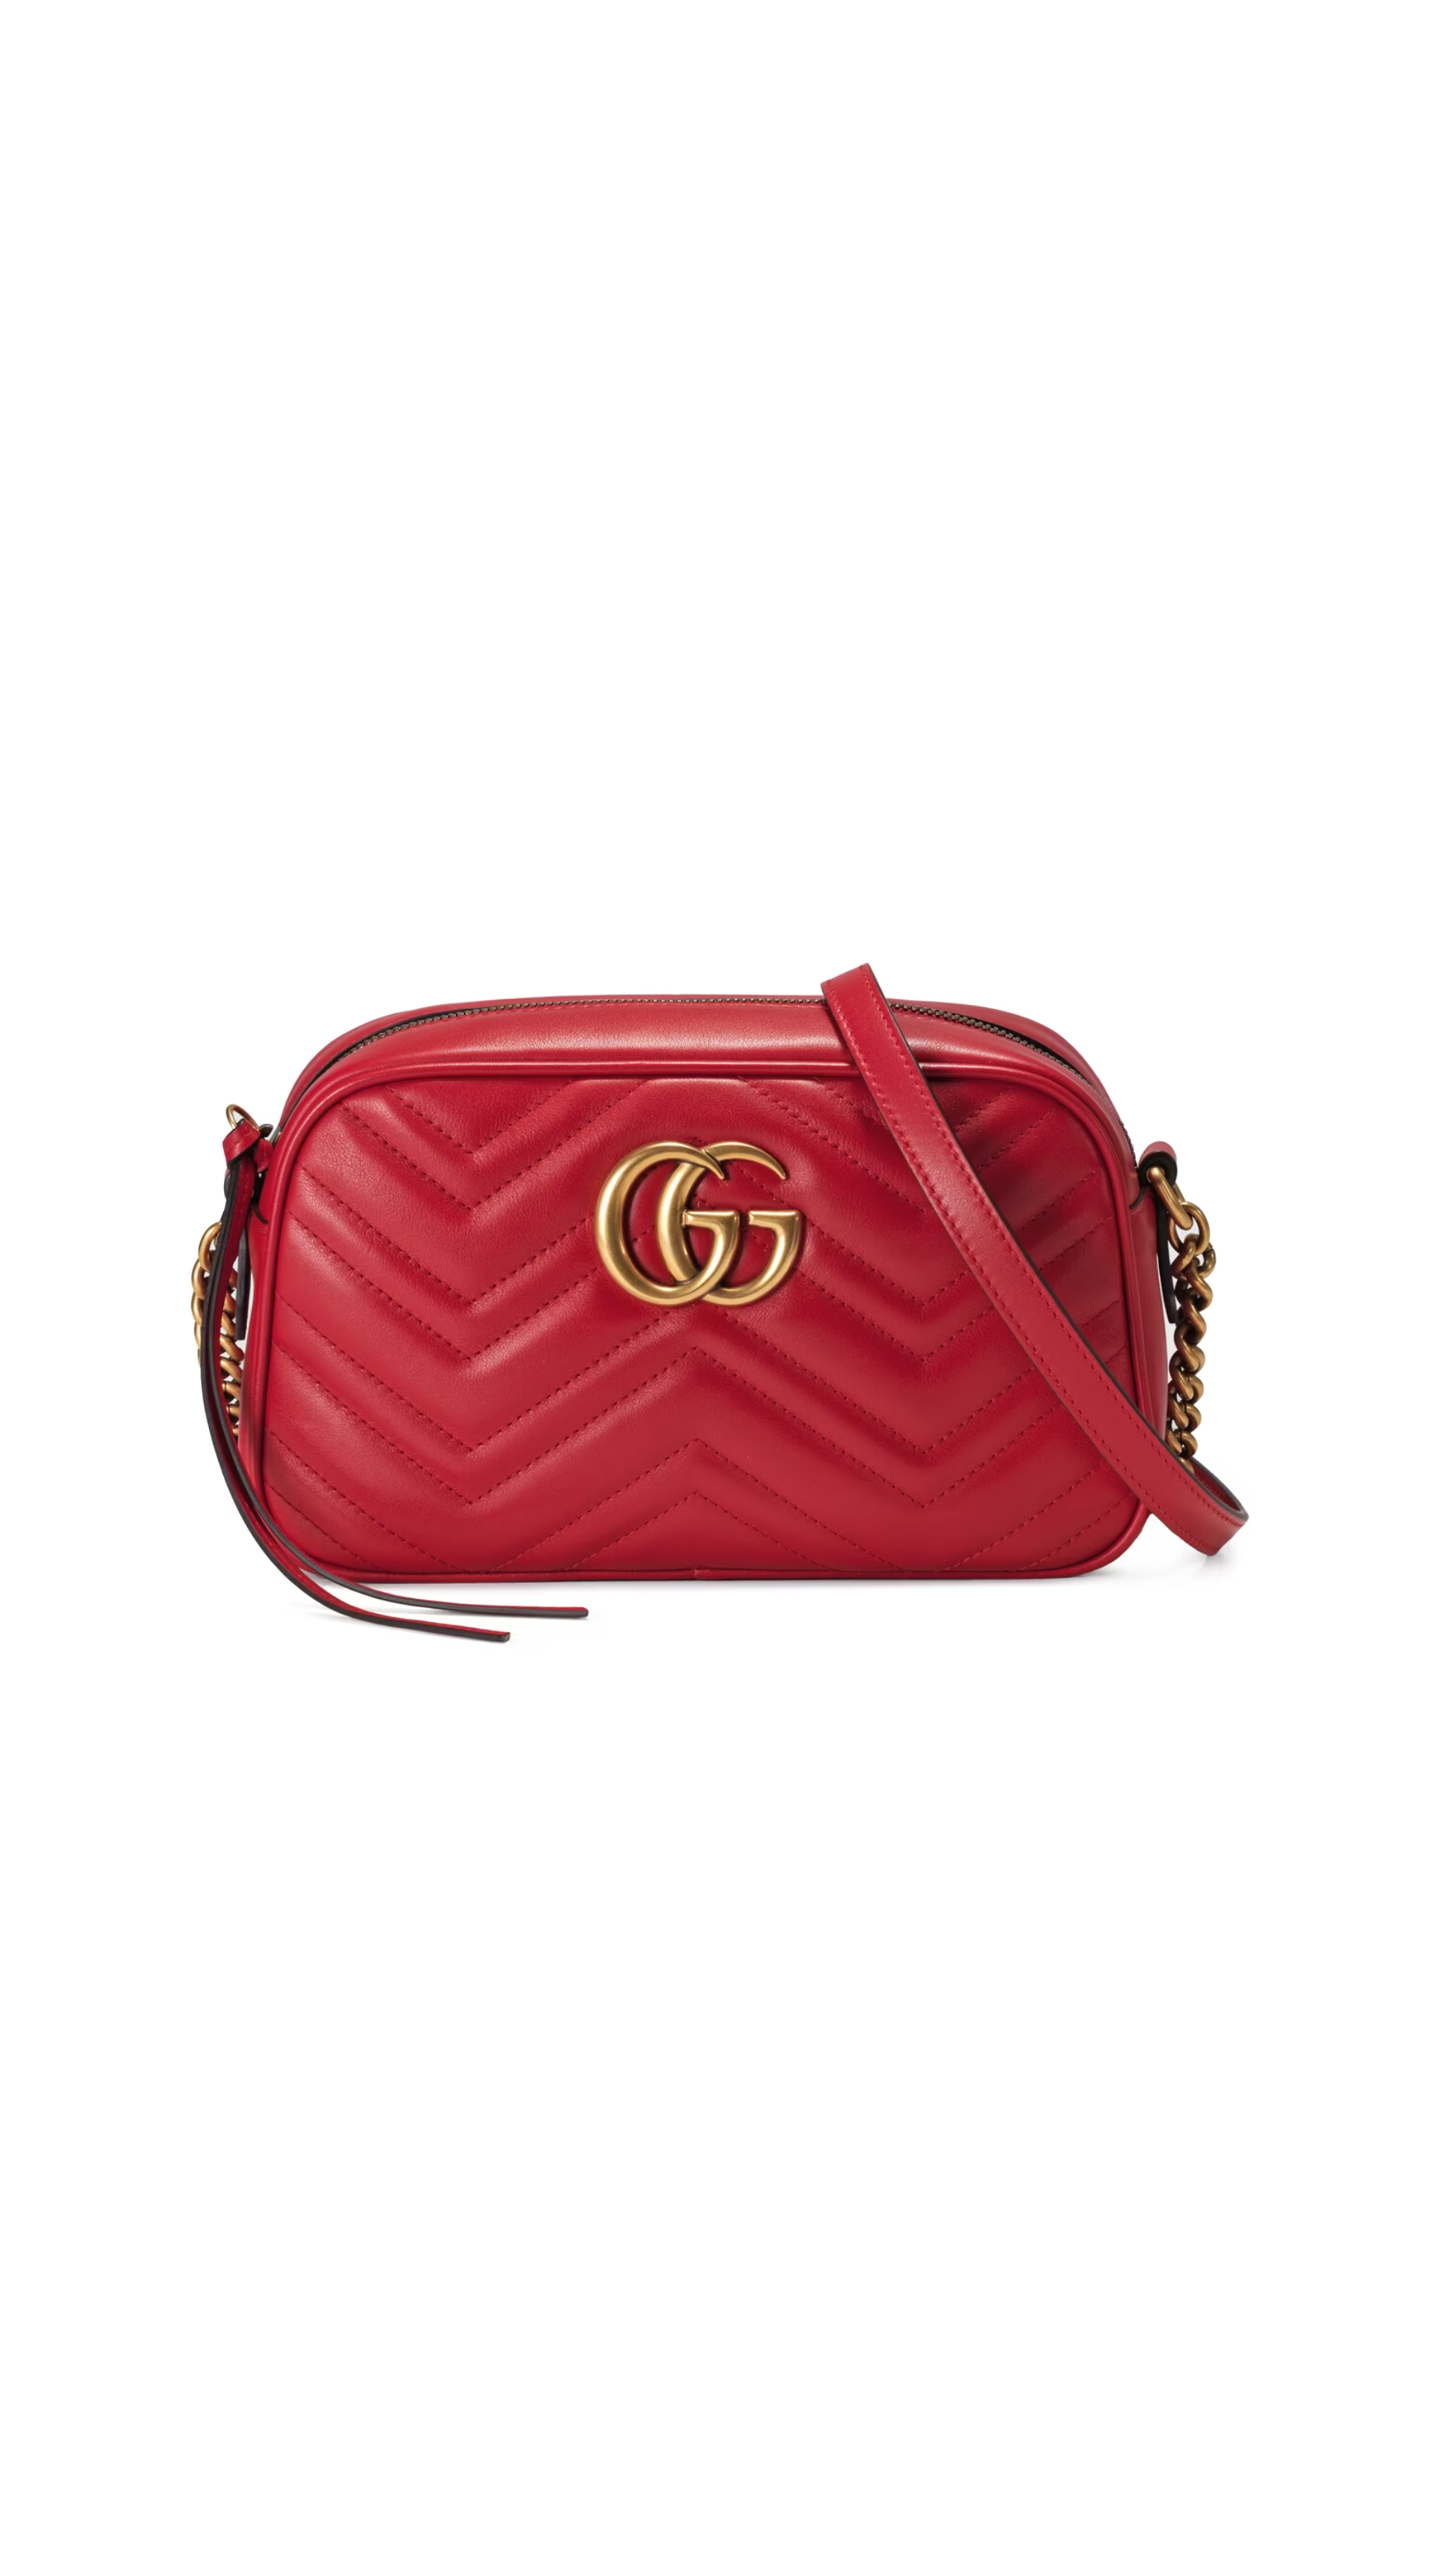 GUCCI GG MARMONT VELVET Small Shoulder Bag | eBay